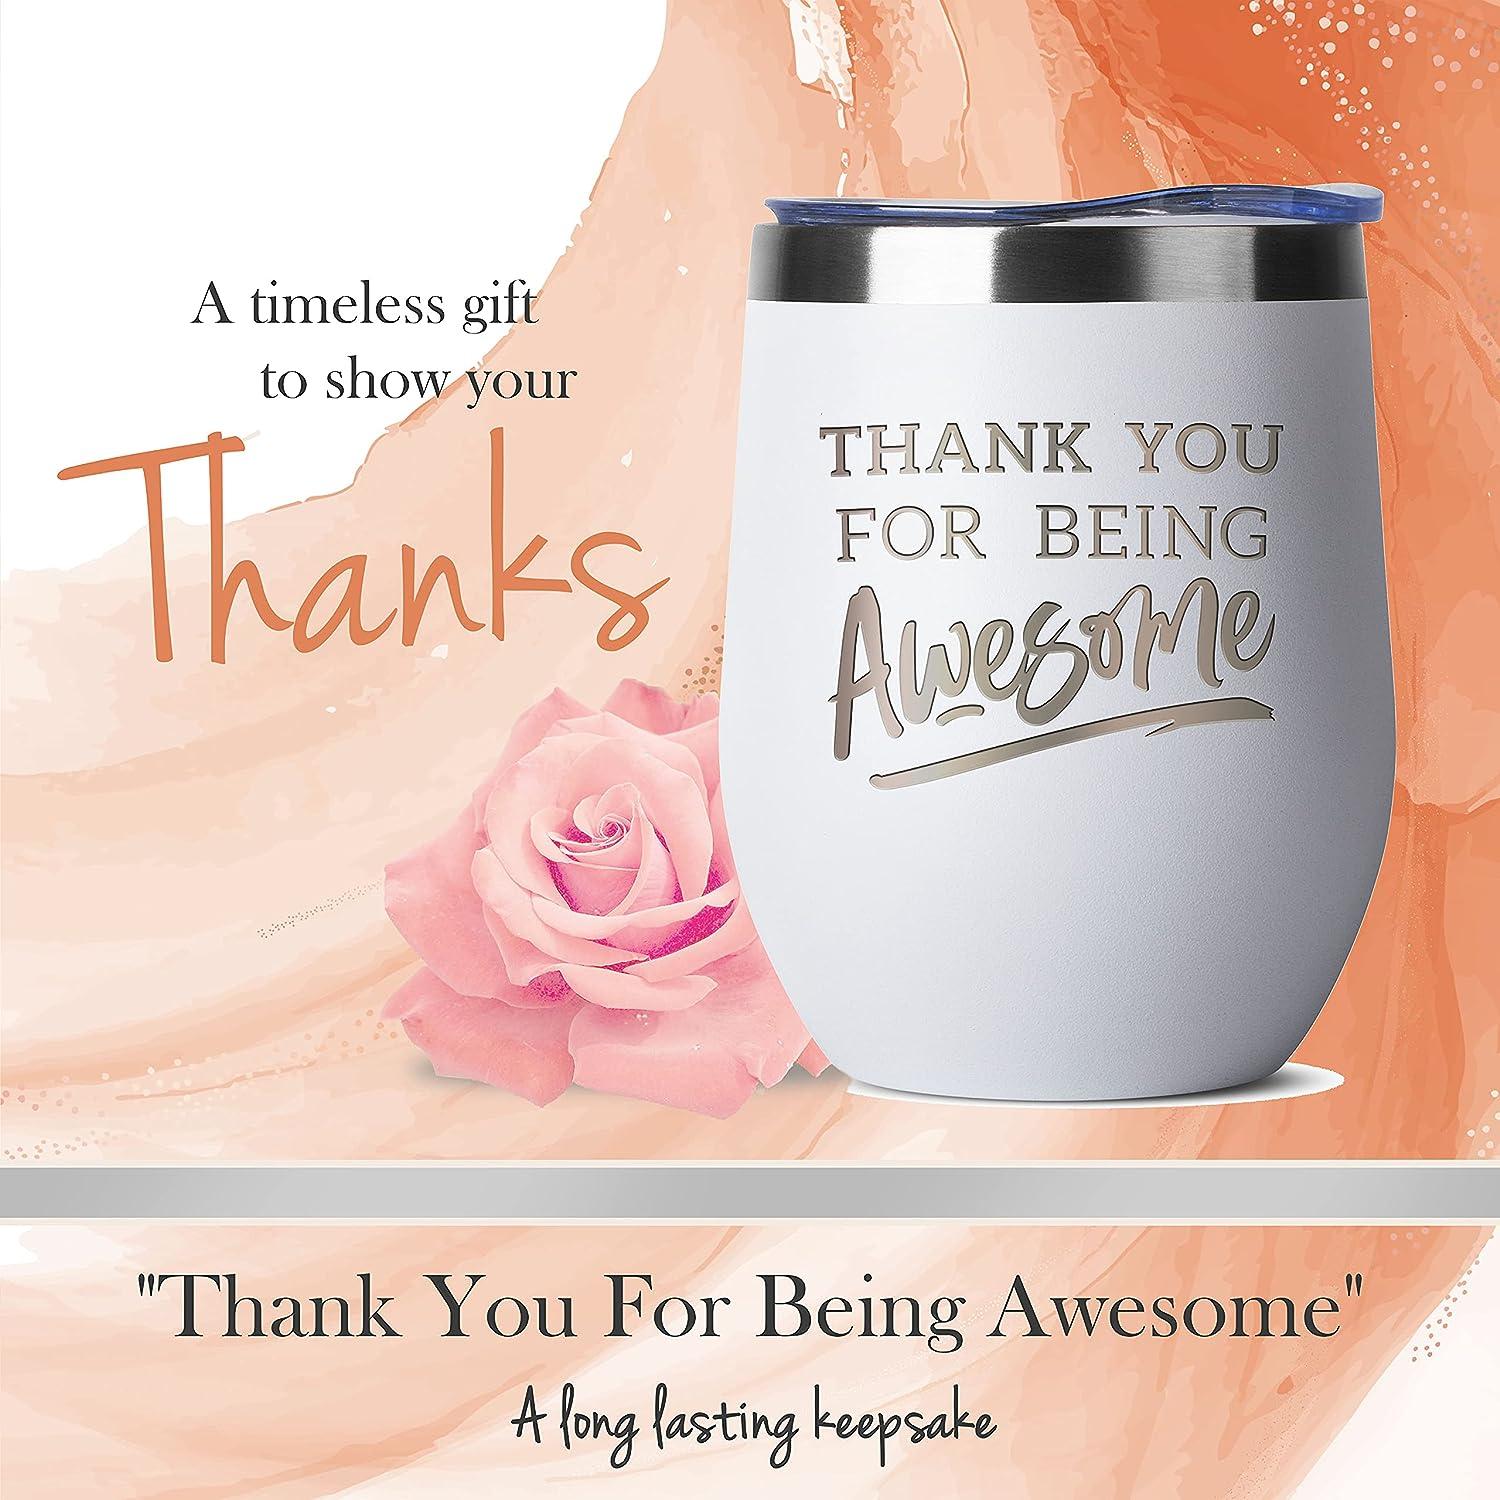  Sodilly Employee Appreciation Gift Box - Thank You